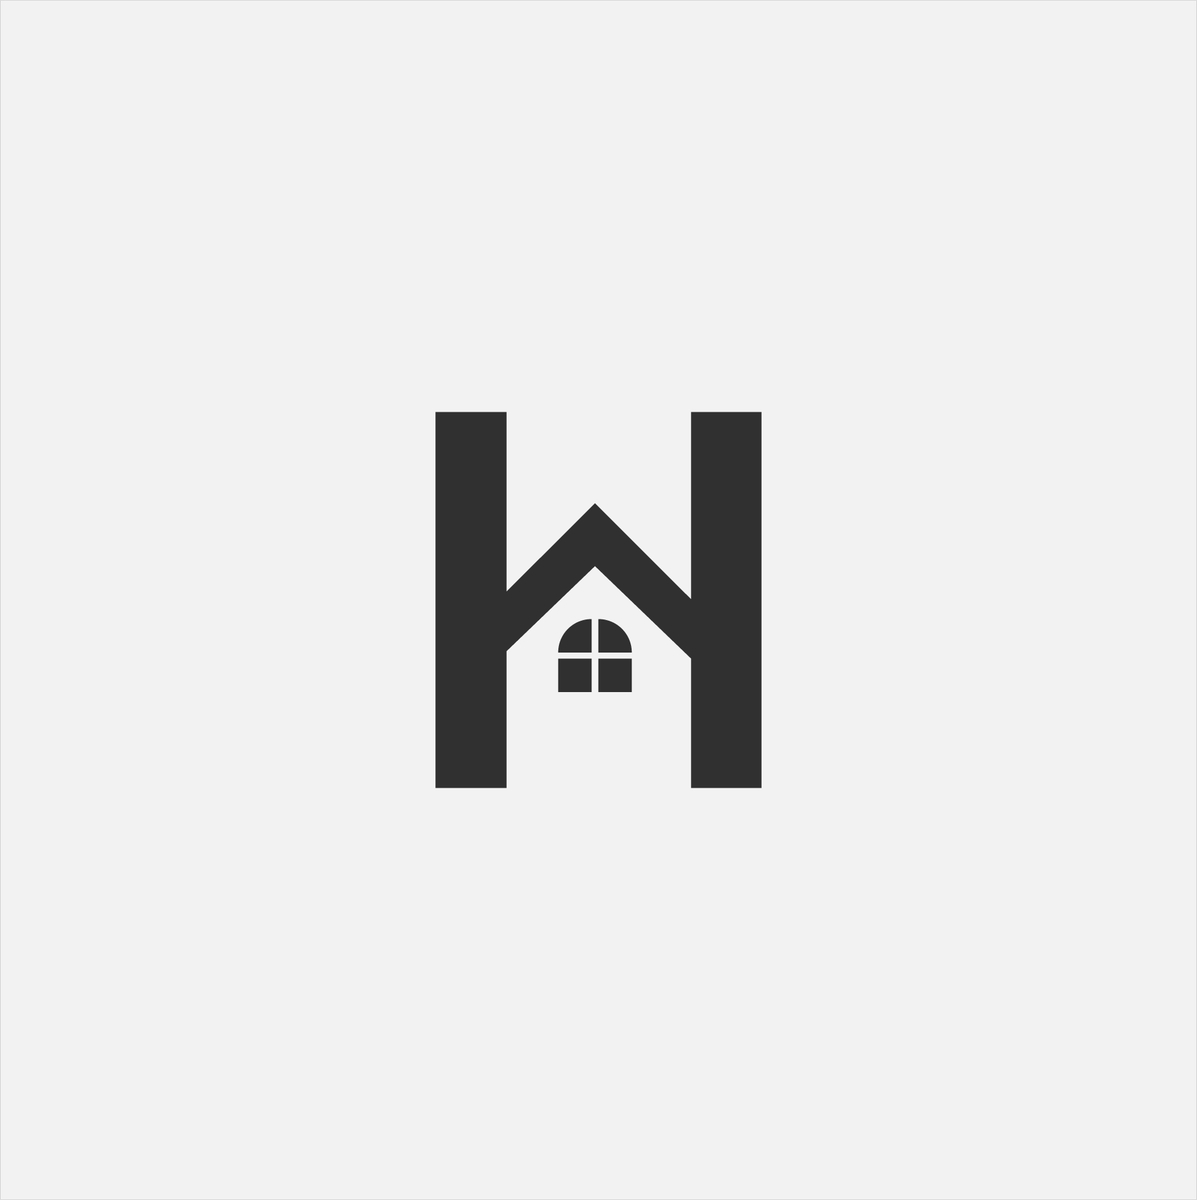 H Letter House Logo by Rakibul Hasan🌏 on Dribbble